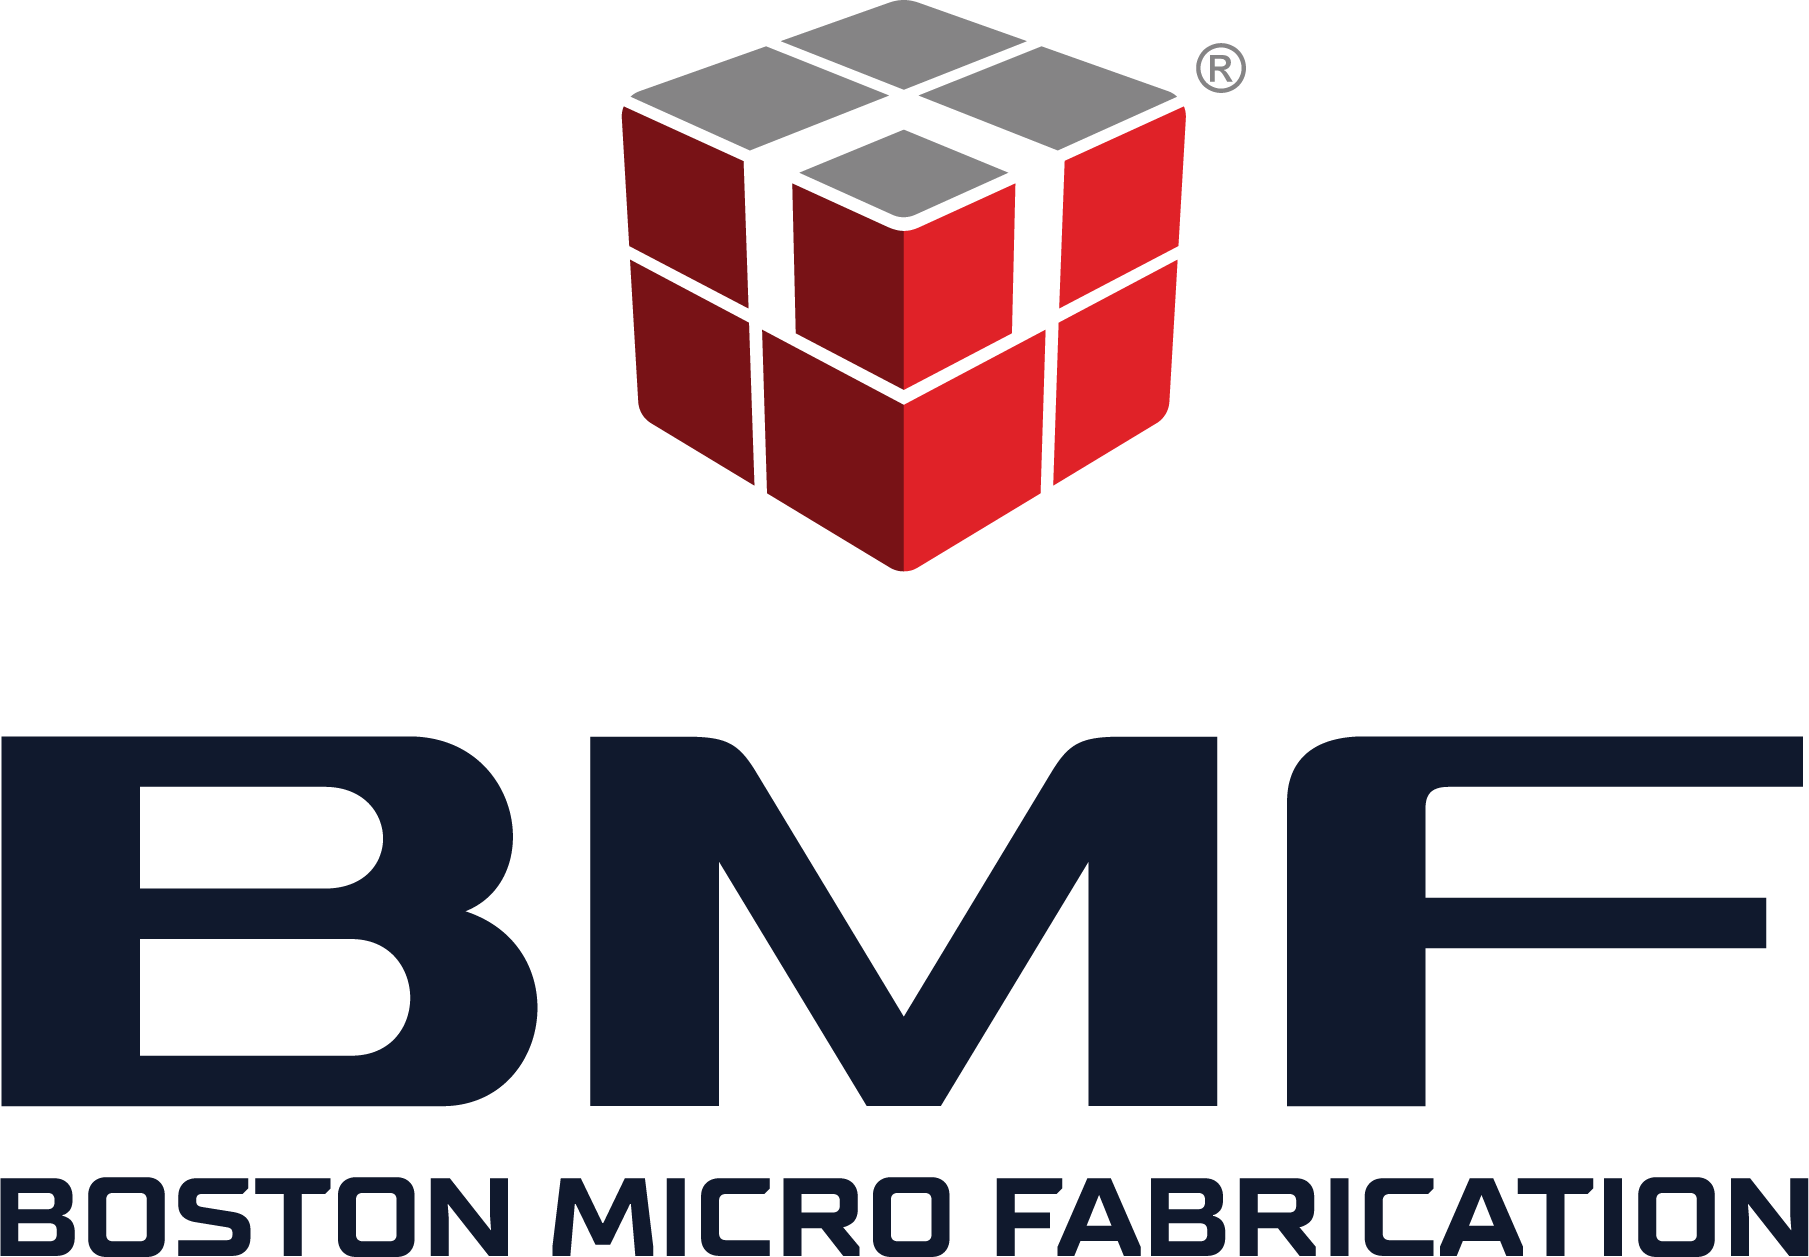 Boston Micro Fabrication 3D